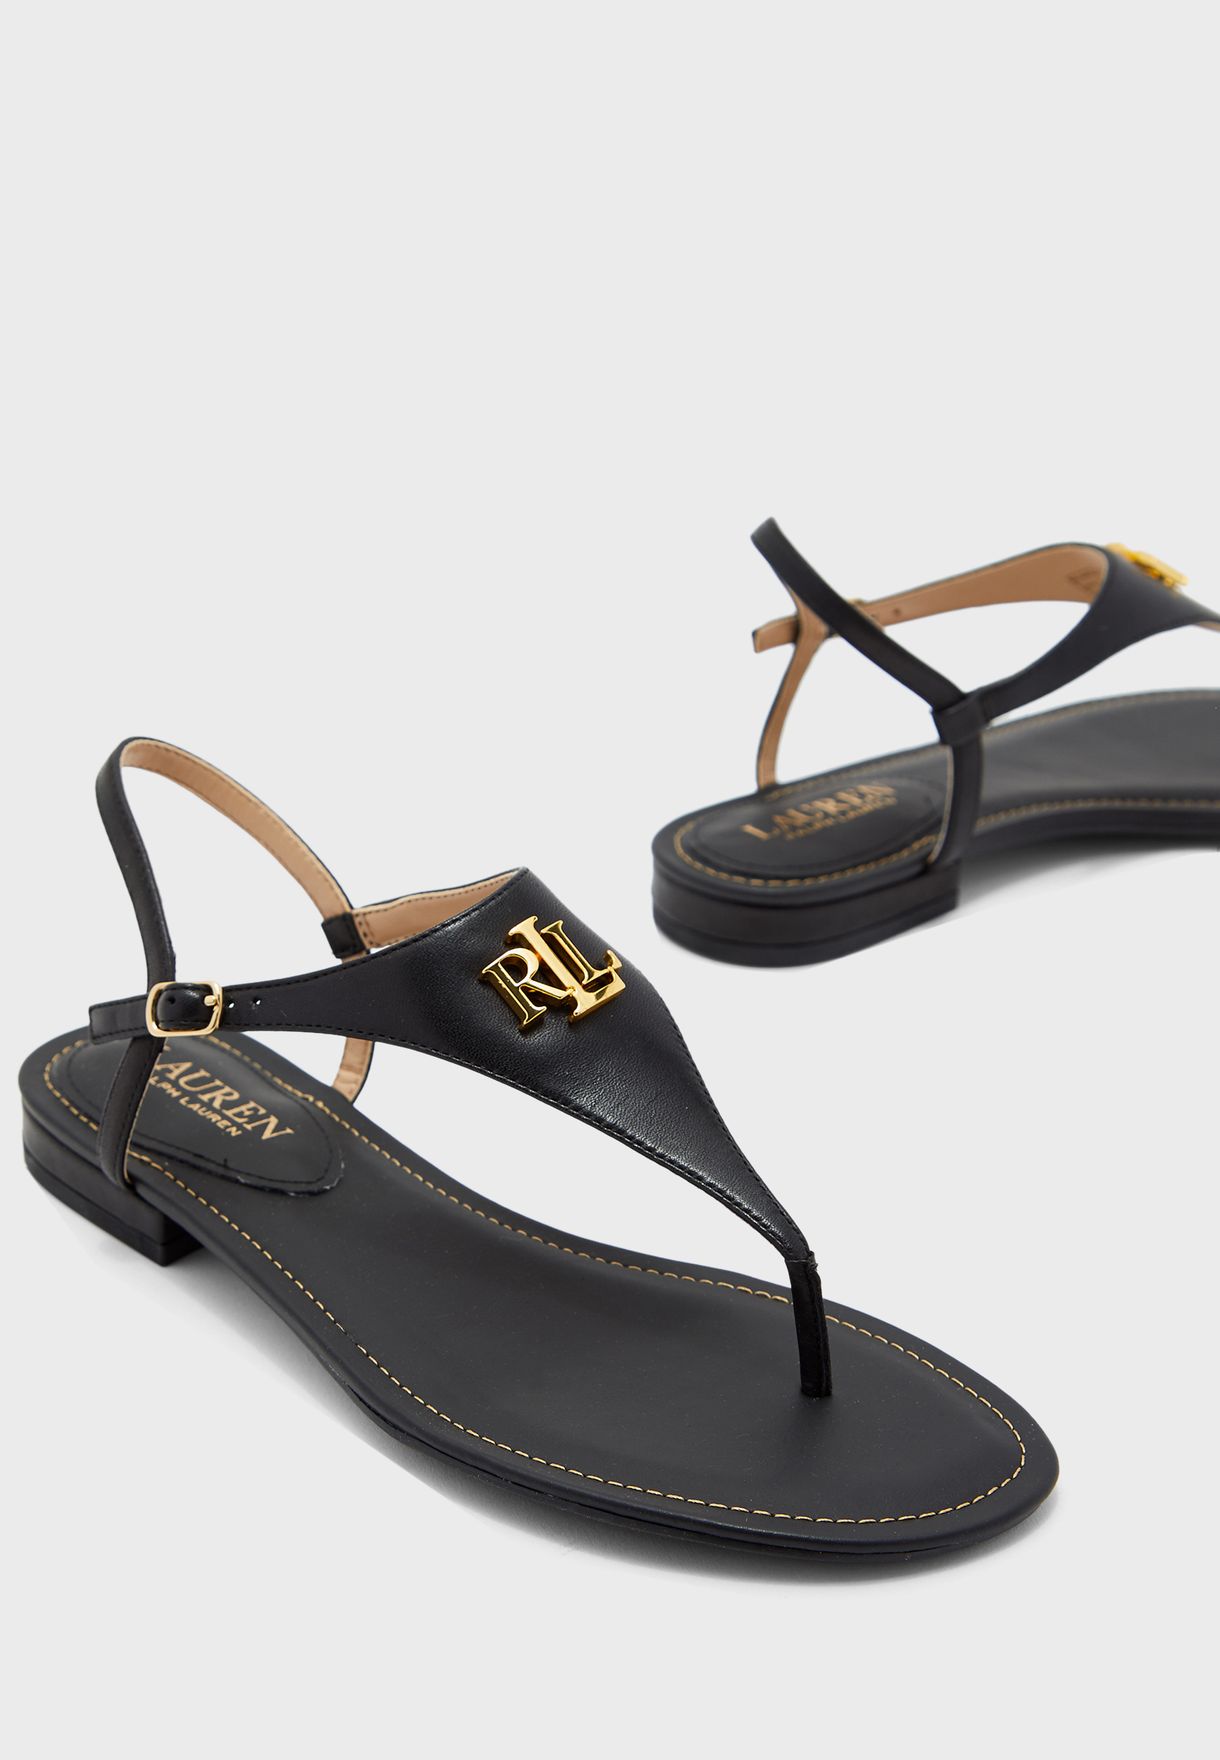 ralph lauren women's flat sandals